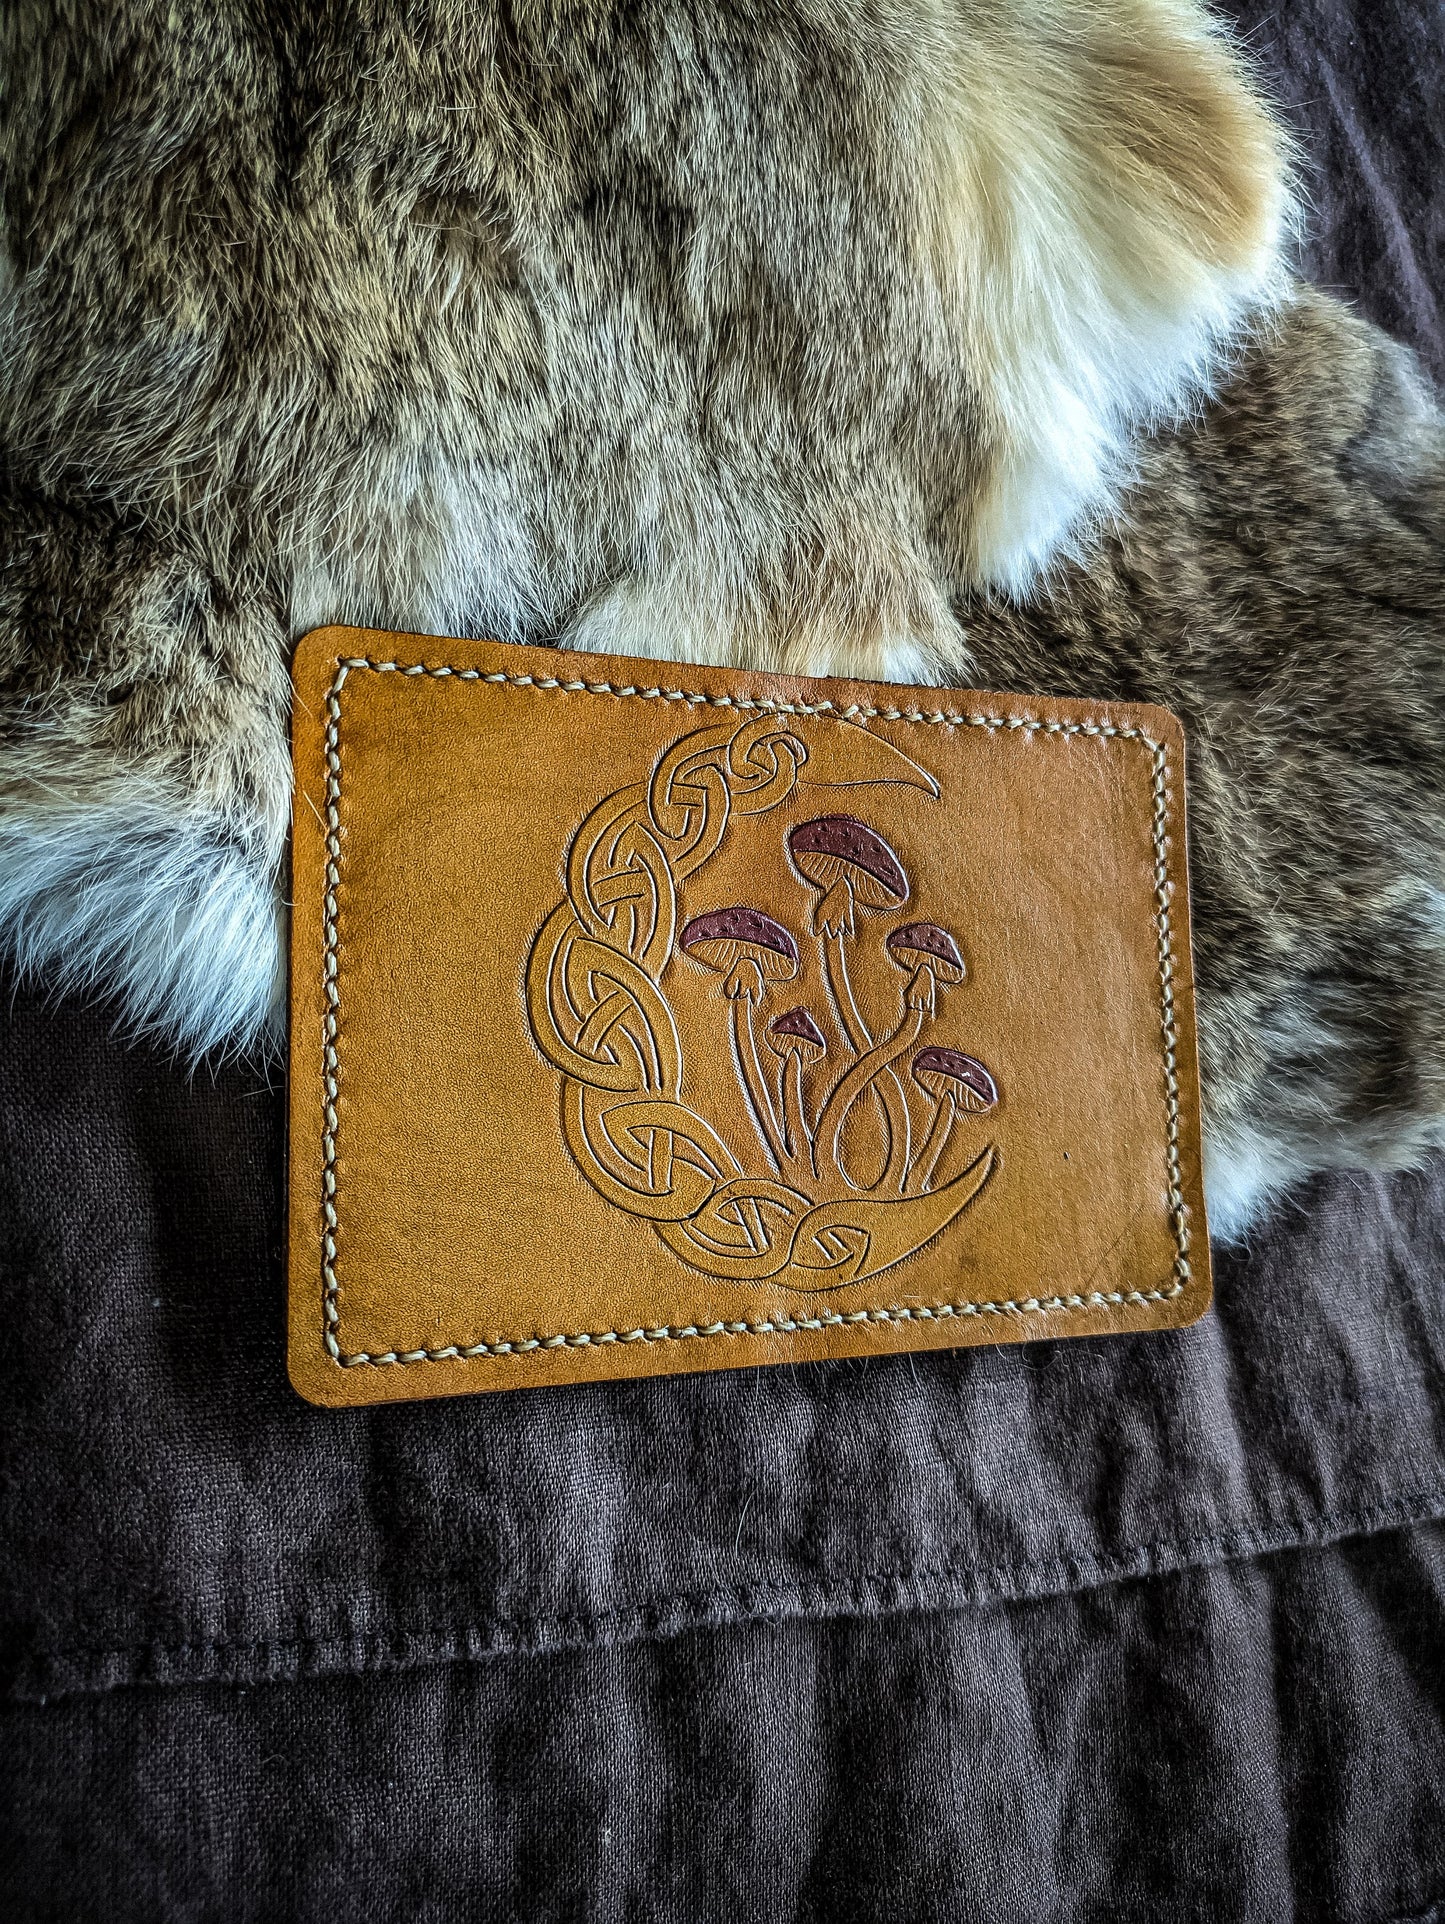 Knotwork Moon and Mushrooms - Cardholder Wallet